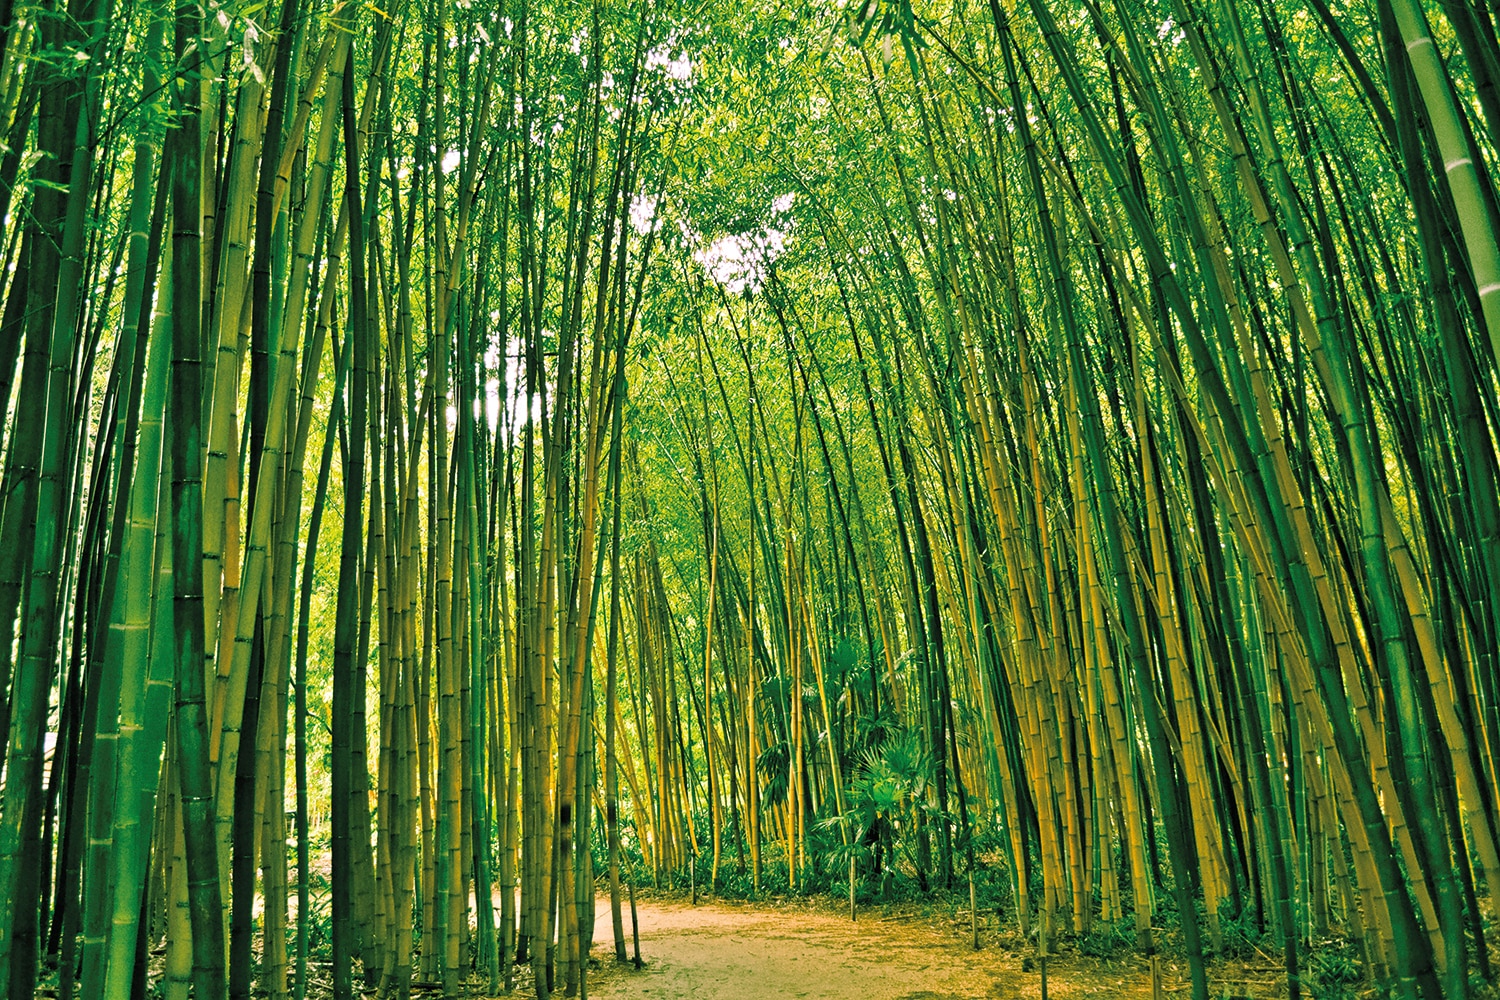 Fototapete »Bamboo Forest«